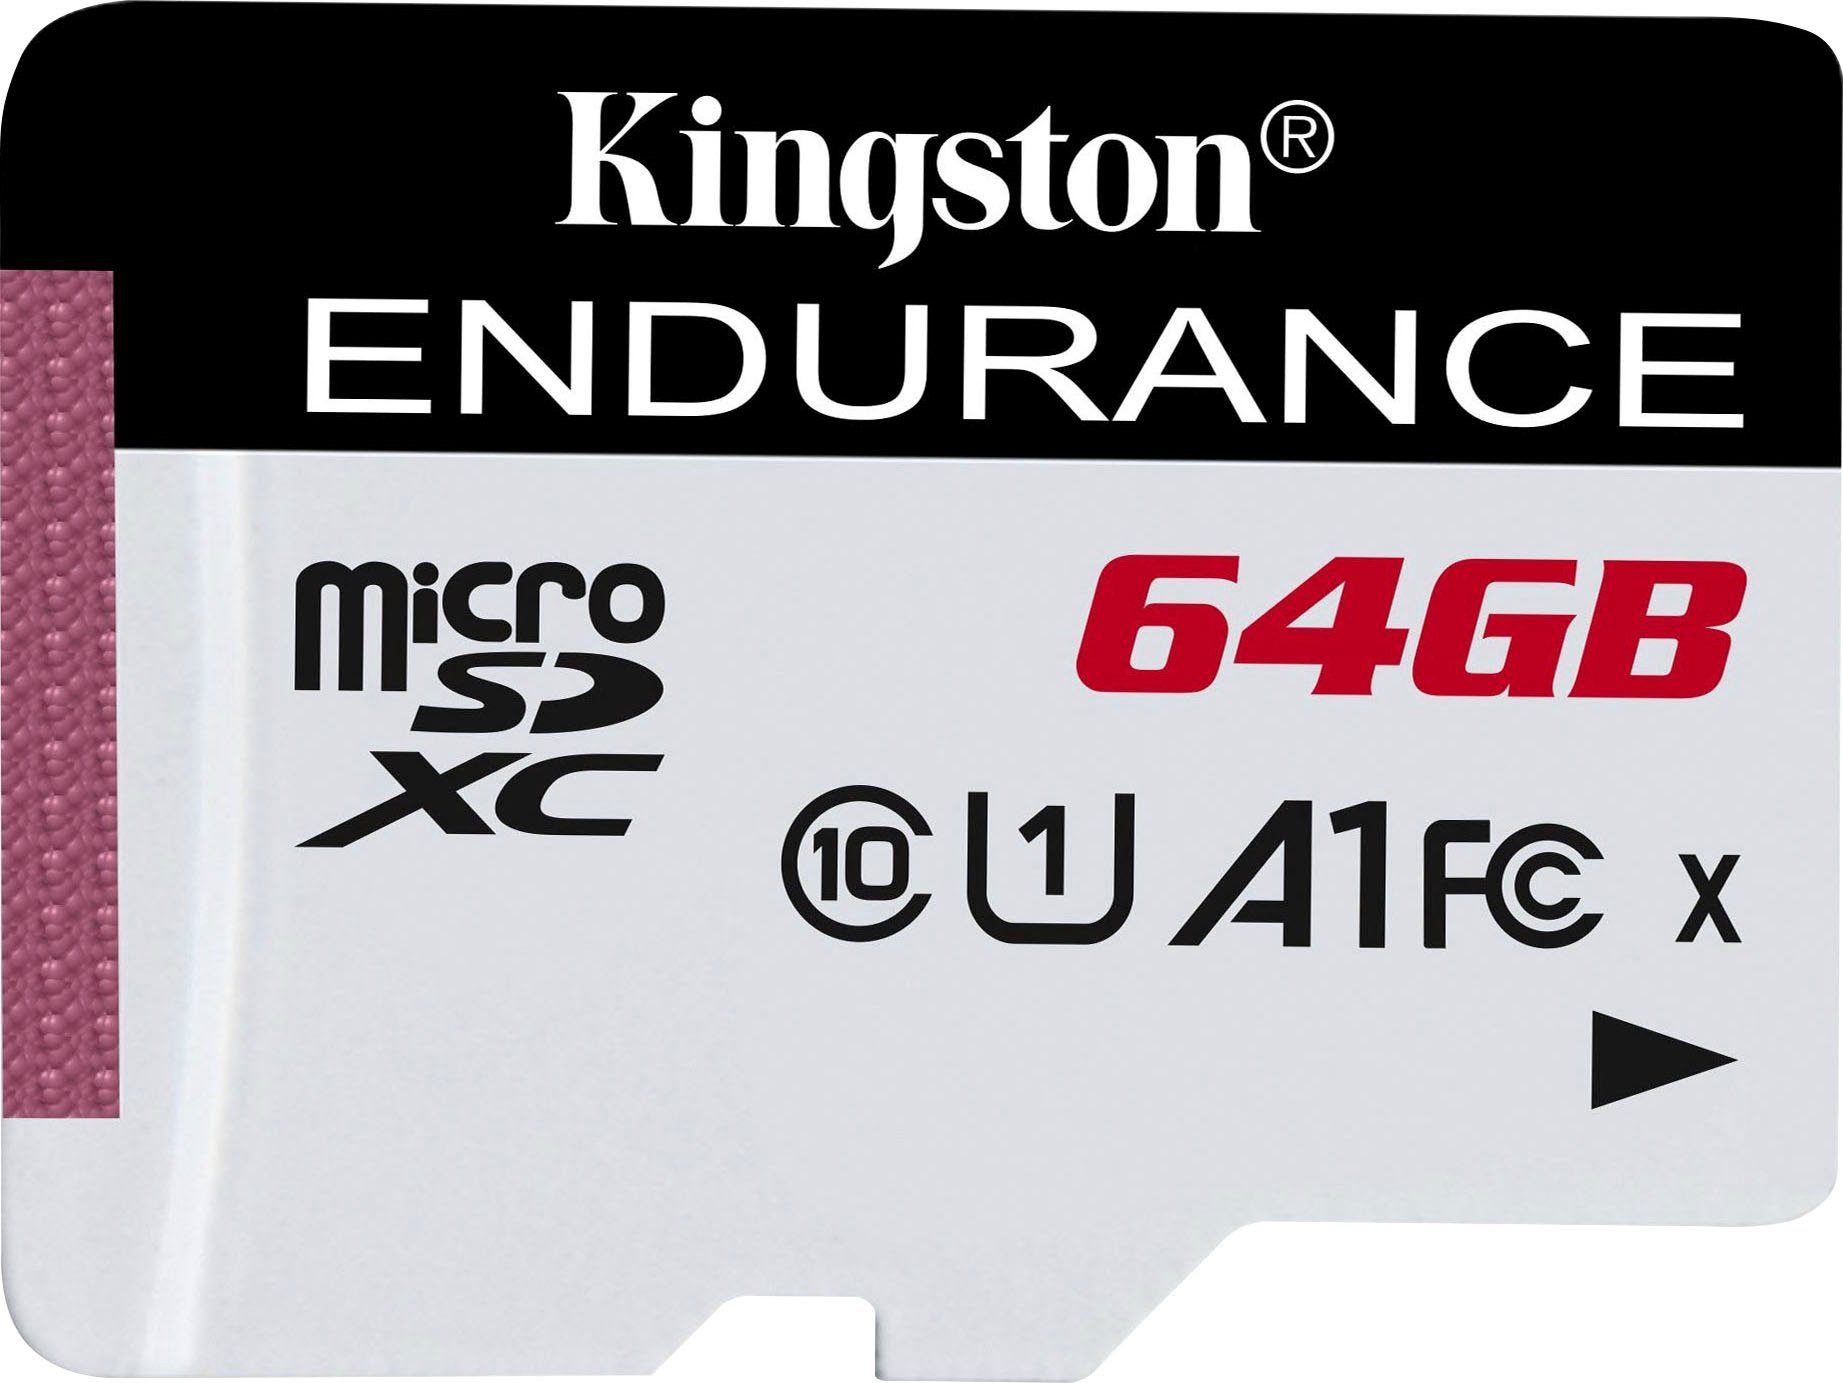 Kingston HIGH-ENDURANCE microSD 64GB Speicherkarte (64 GB, UHS-I Class 10, 95 MB/s Lesegeschwindigkeit)